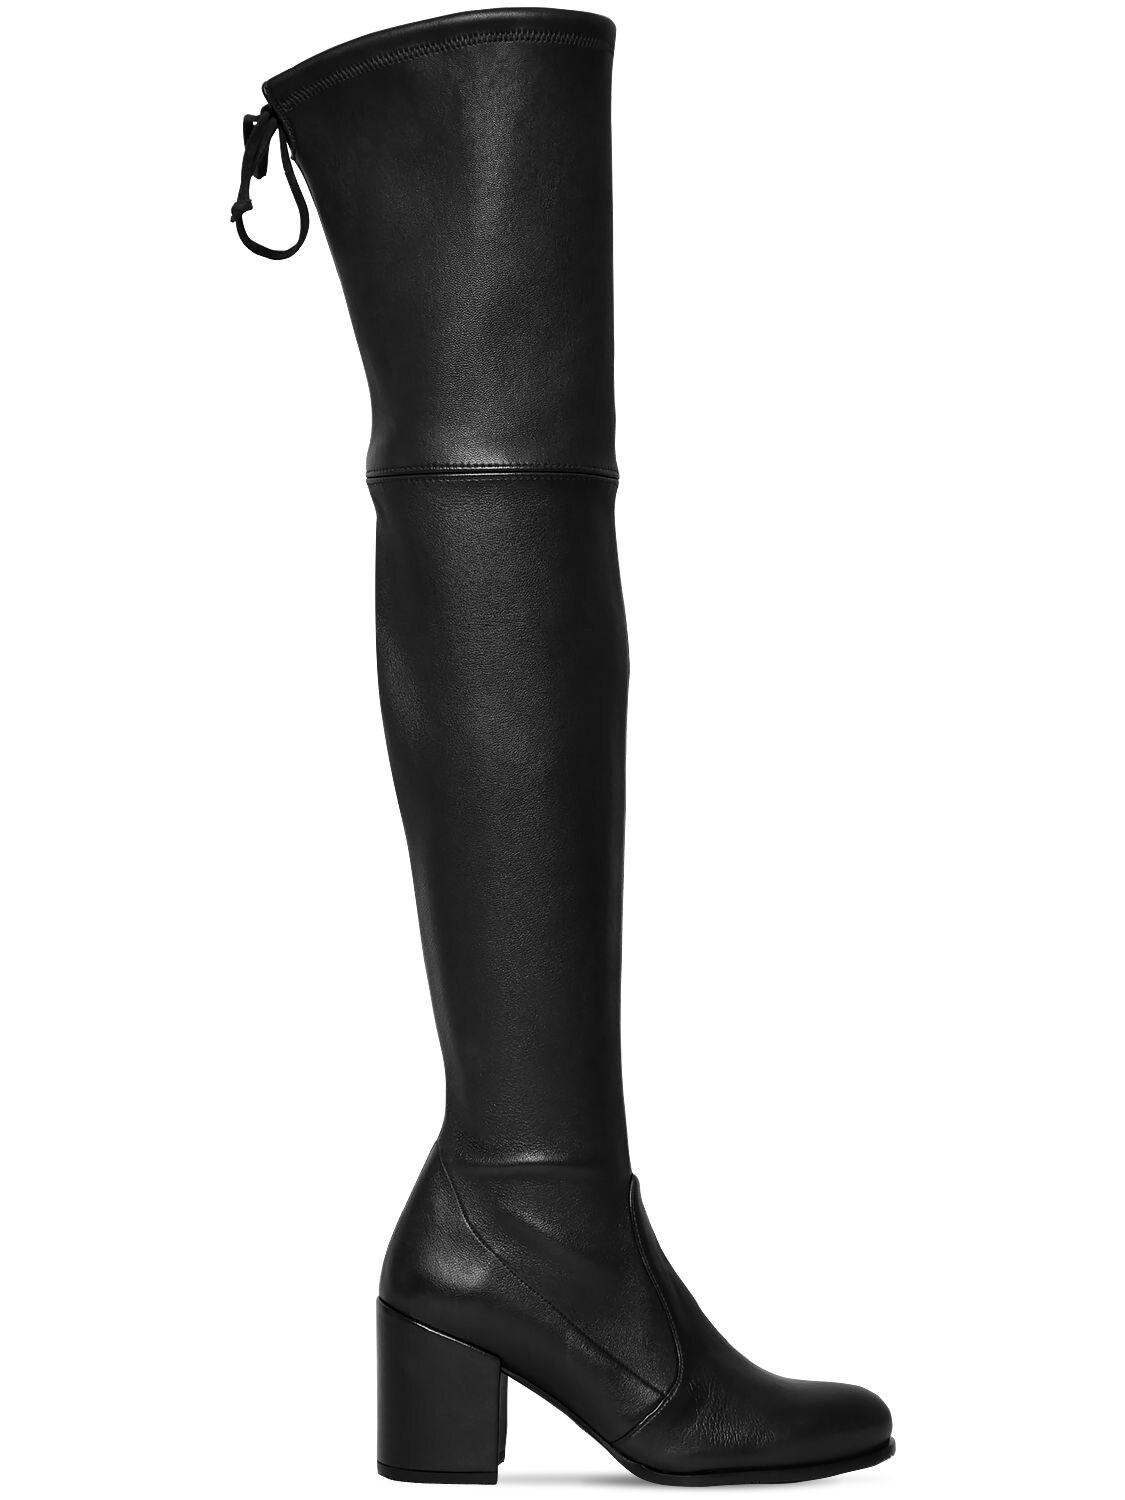 Stuart Weitzman 70mm Tieland Stretch Leather Boots in Black - Lyst